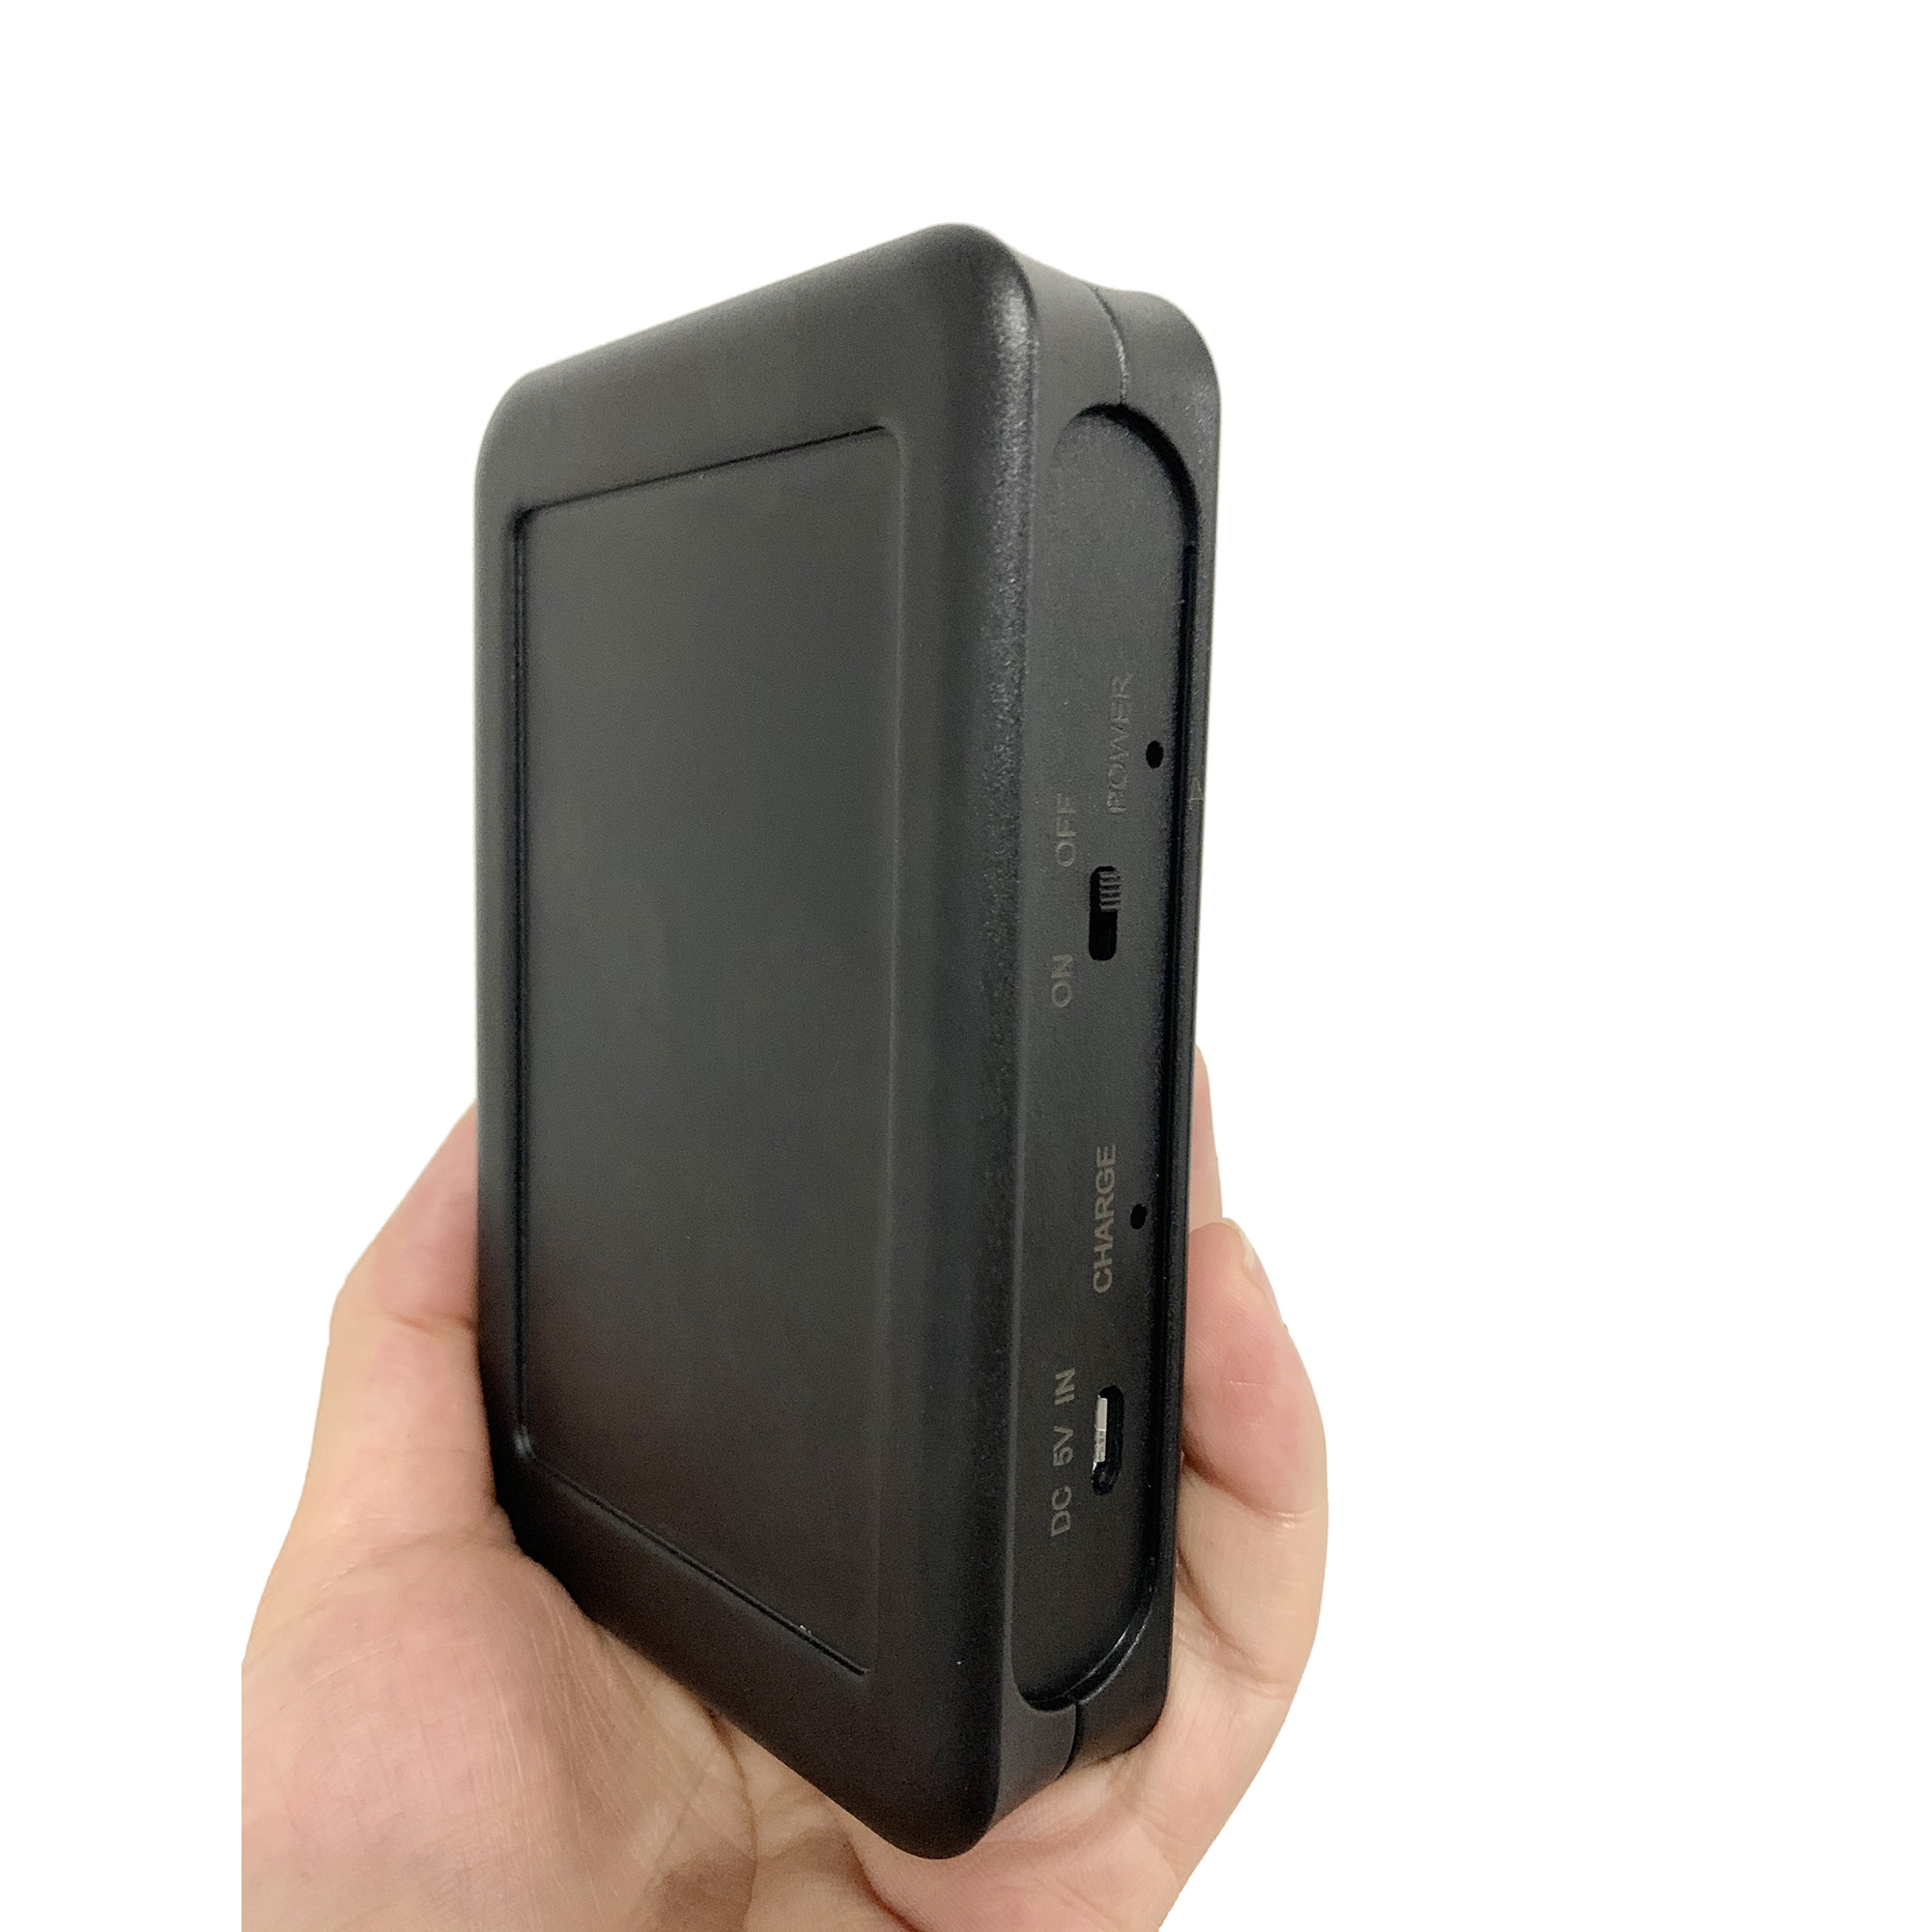 jammer legal team website | Mini Hidden Pocket 8 Bands Portable Cell Phone Jammers For 3G 4G CDMA GSM